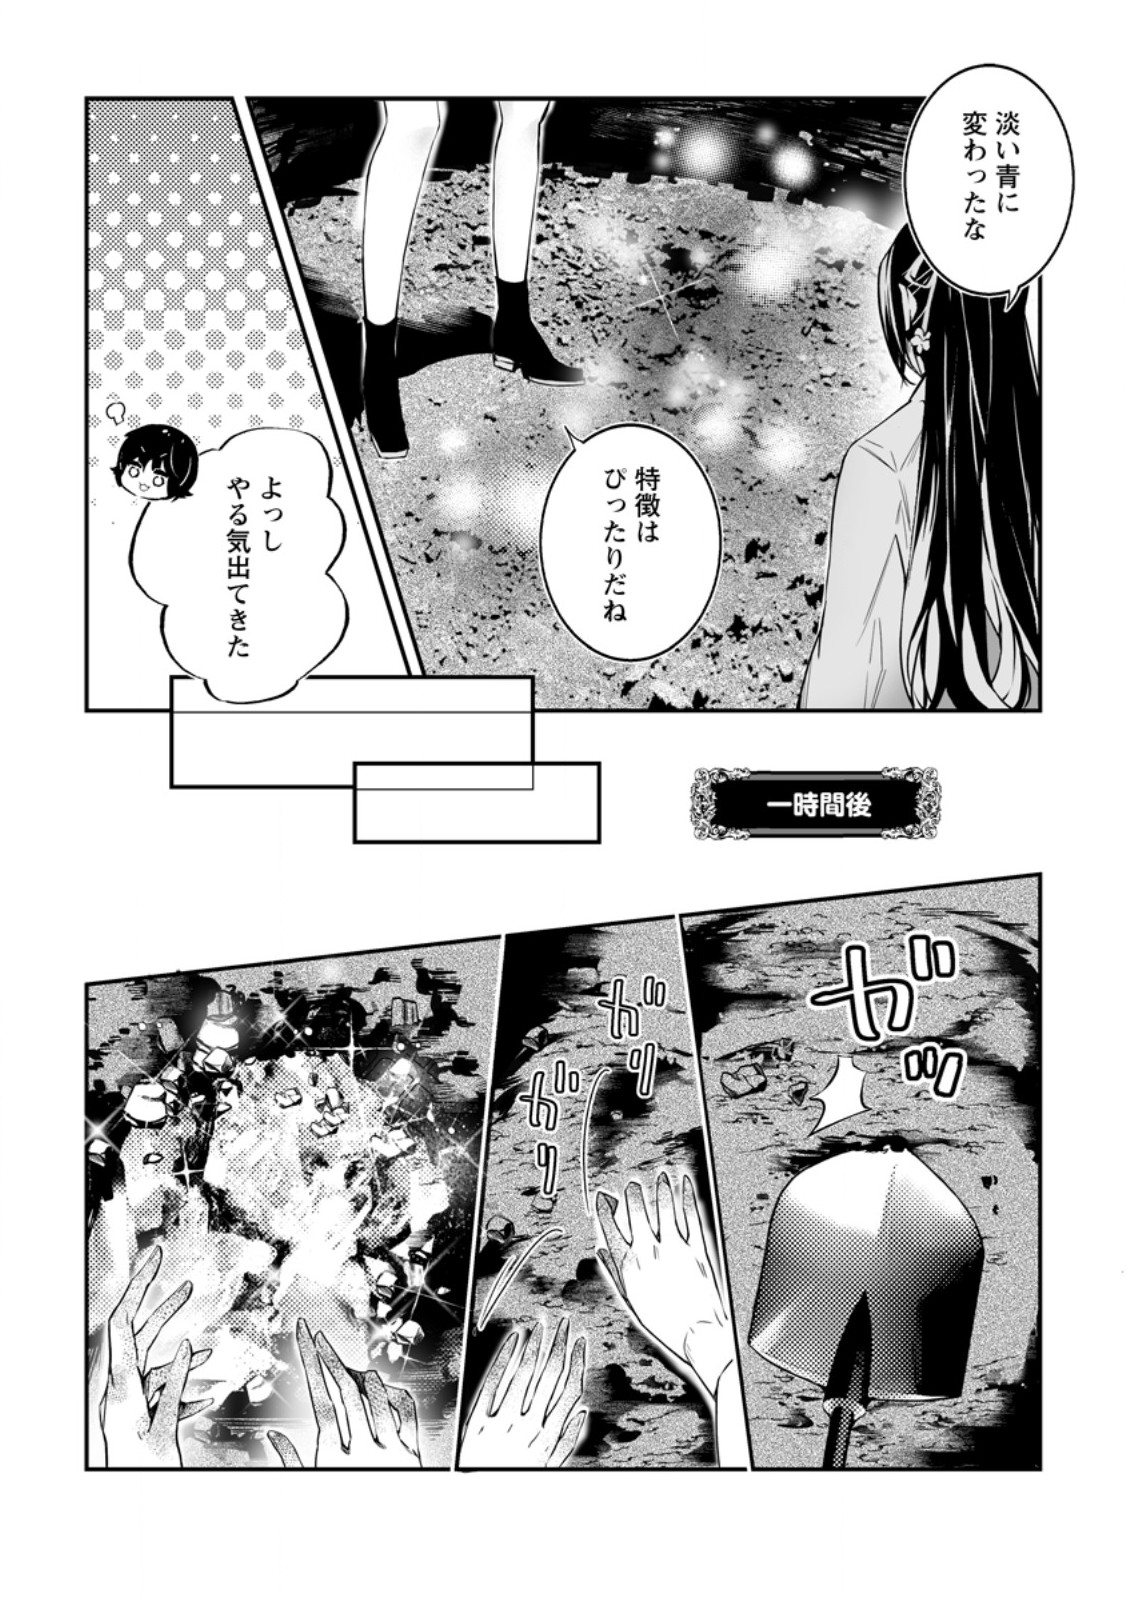 Hakui no Eiyuu - Chapter 35.3 - Page 1